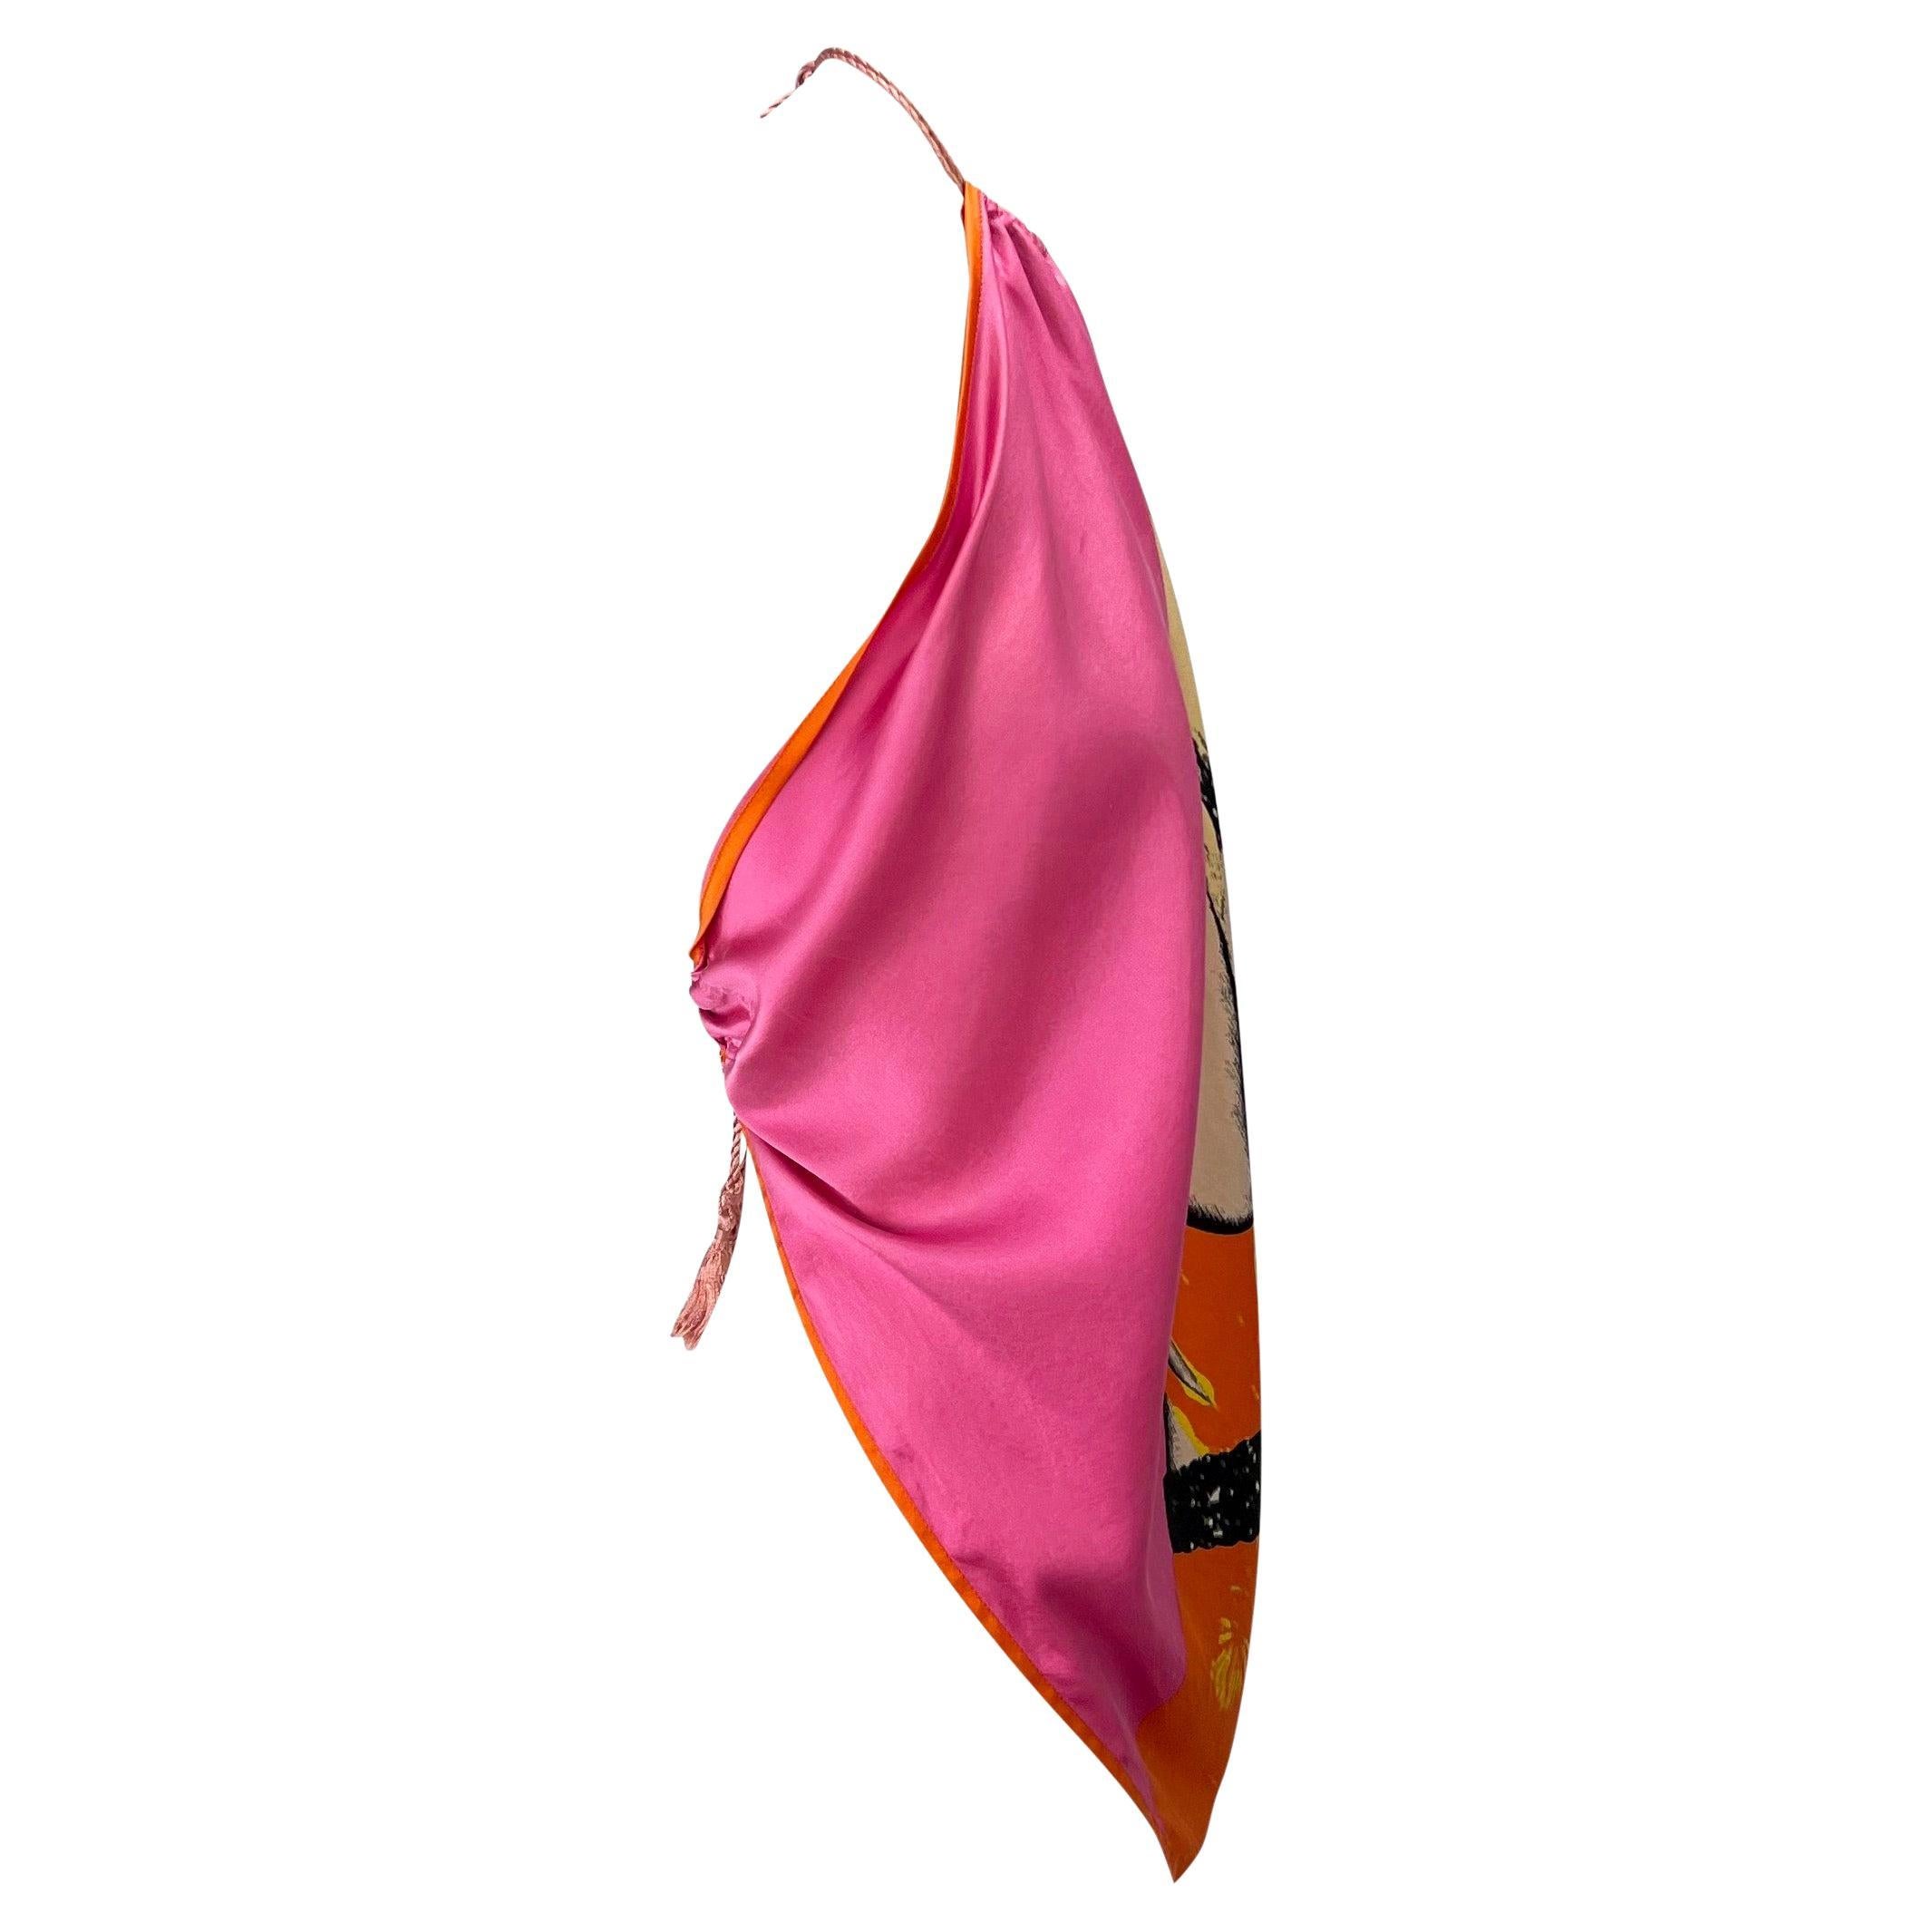 S/S 2004 Versace by Donatella Pink Pop Art Silk Scarf Tassel Blouse For Sale 2